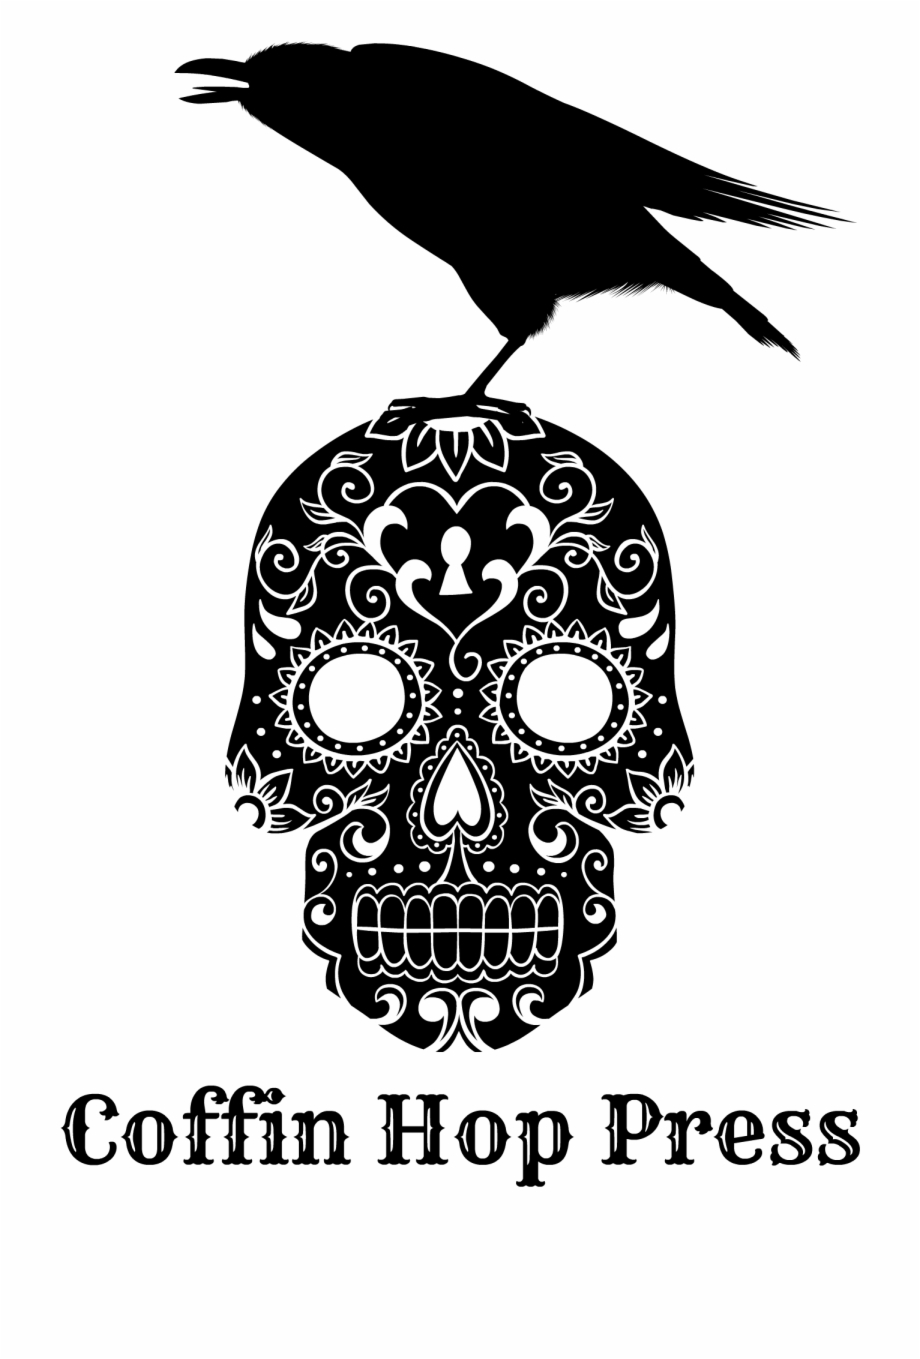 Coffin Hop Press On Twitter Skull